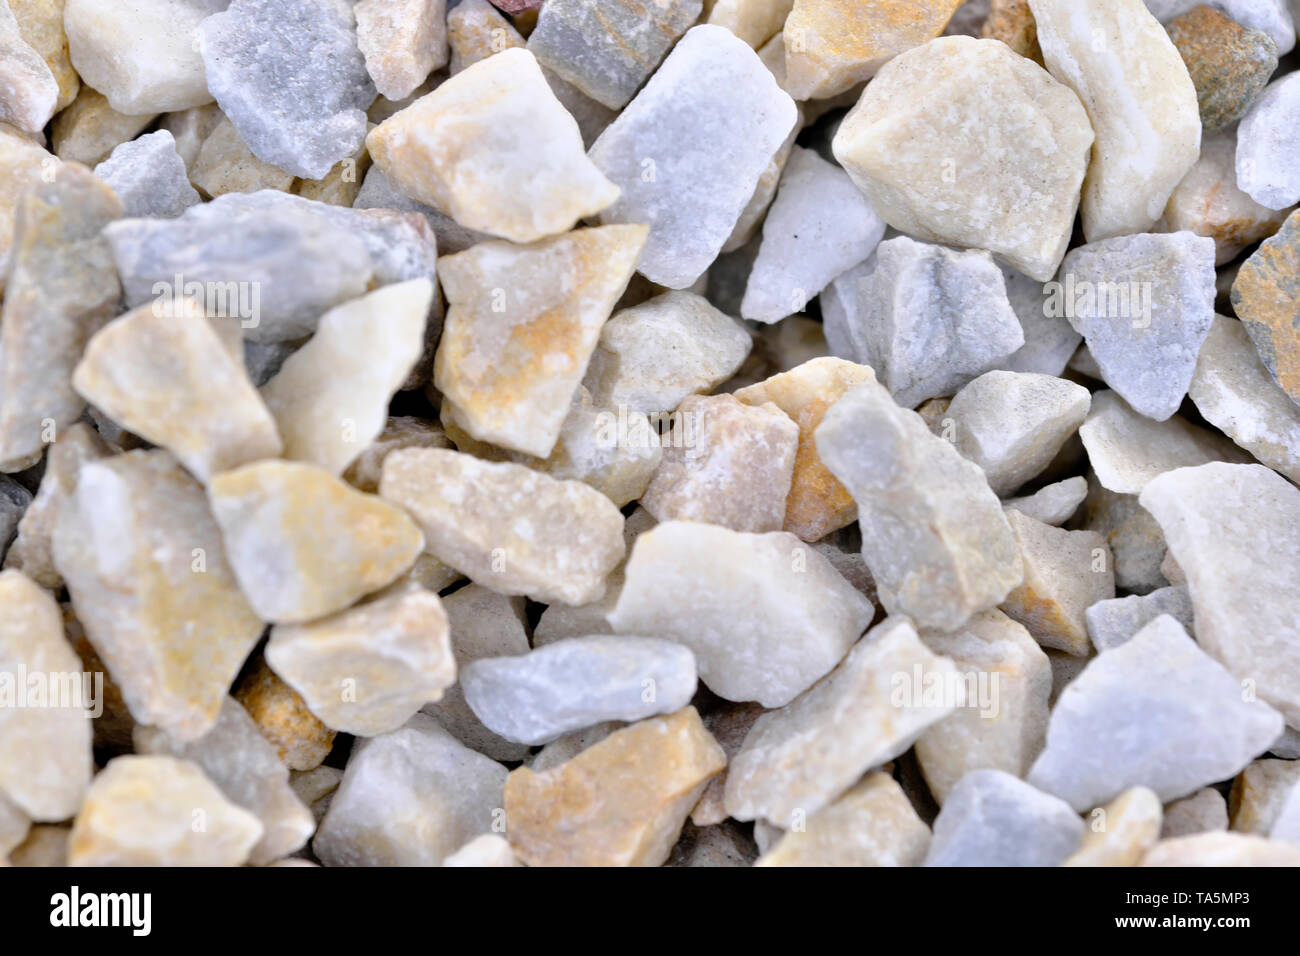 Decorative stone construction crumb close-up macro photo of a stone designer background Stock Photo